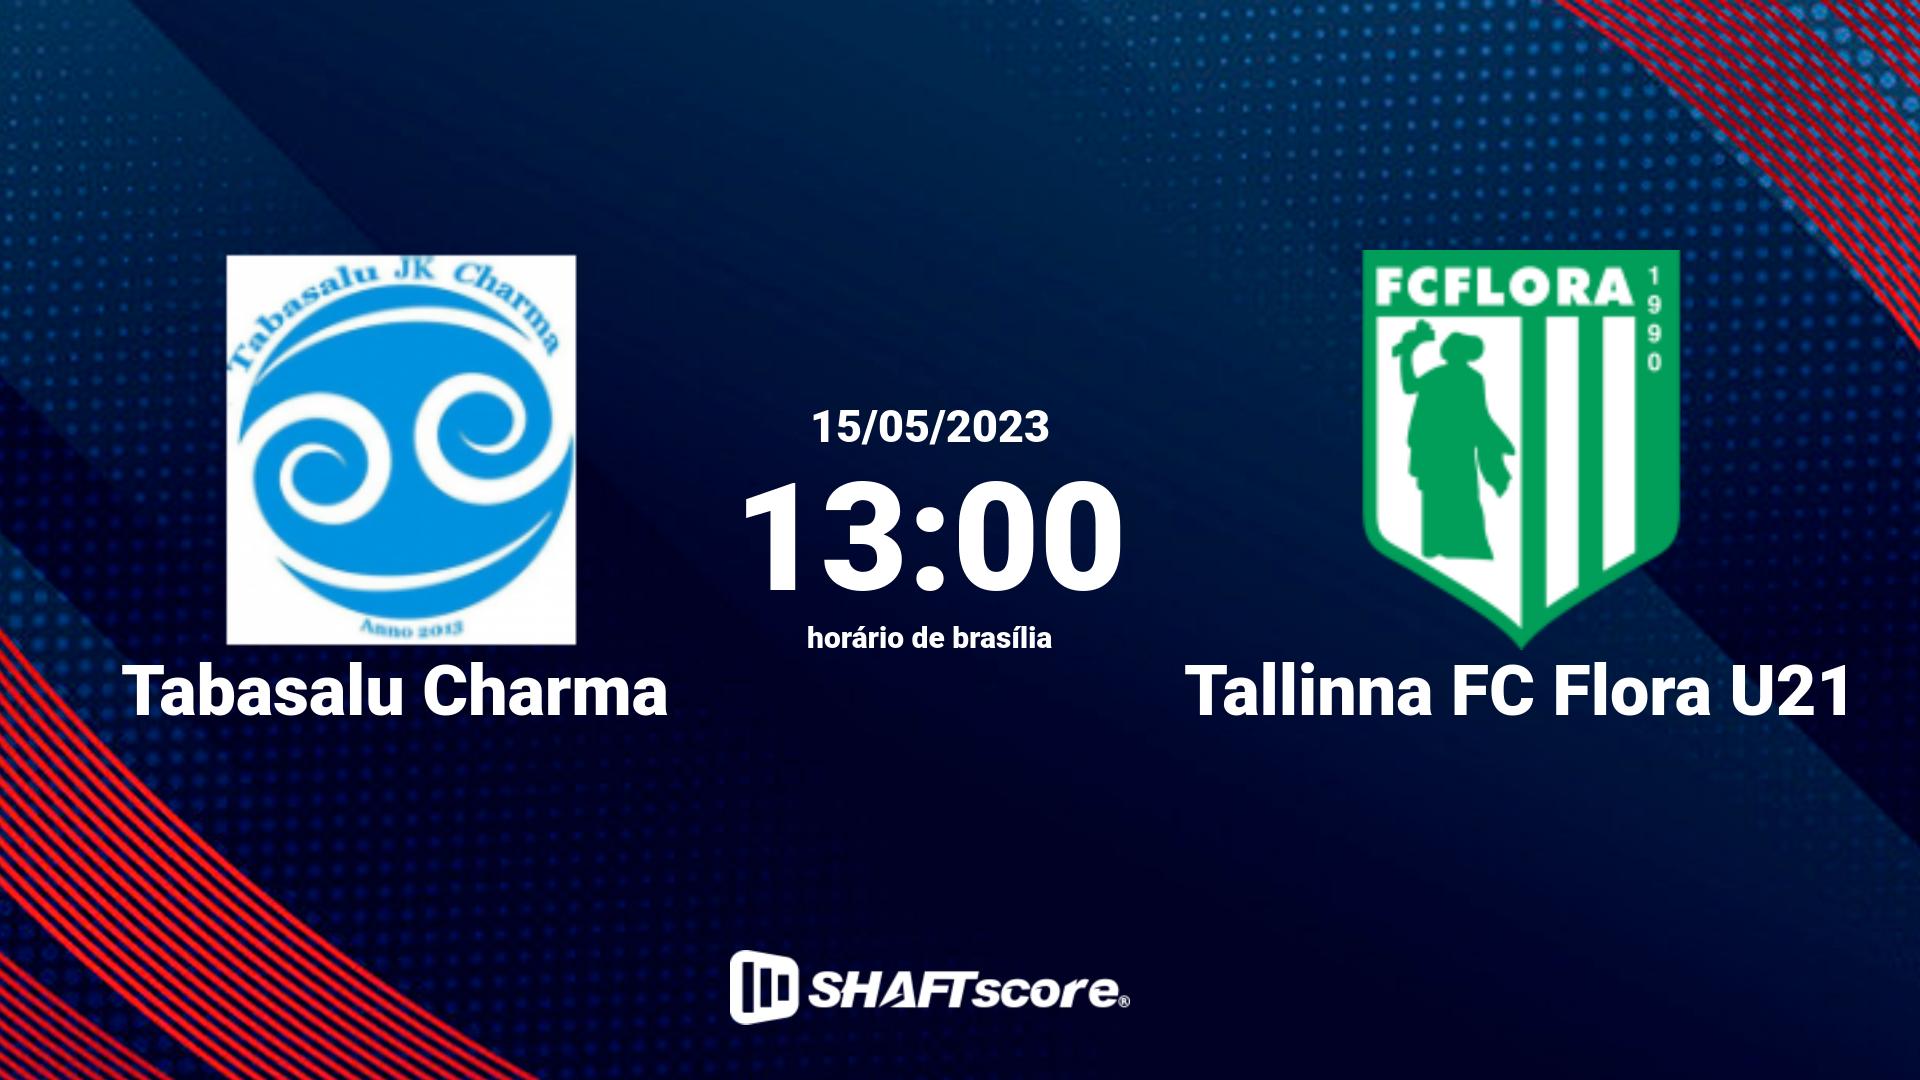 Estatísticas do jogo Tabasalu Charma vs Tallinna FC Flora U21 15.05 13:00